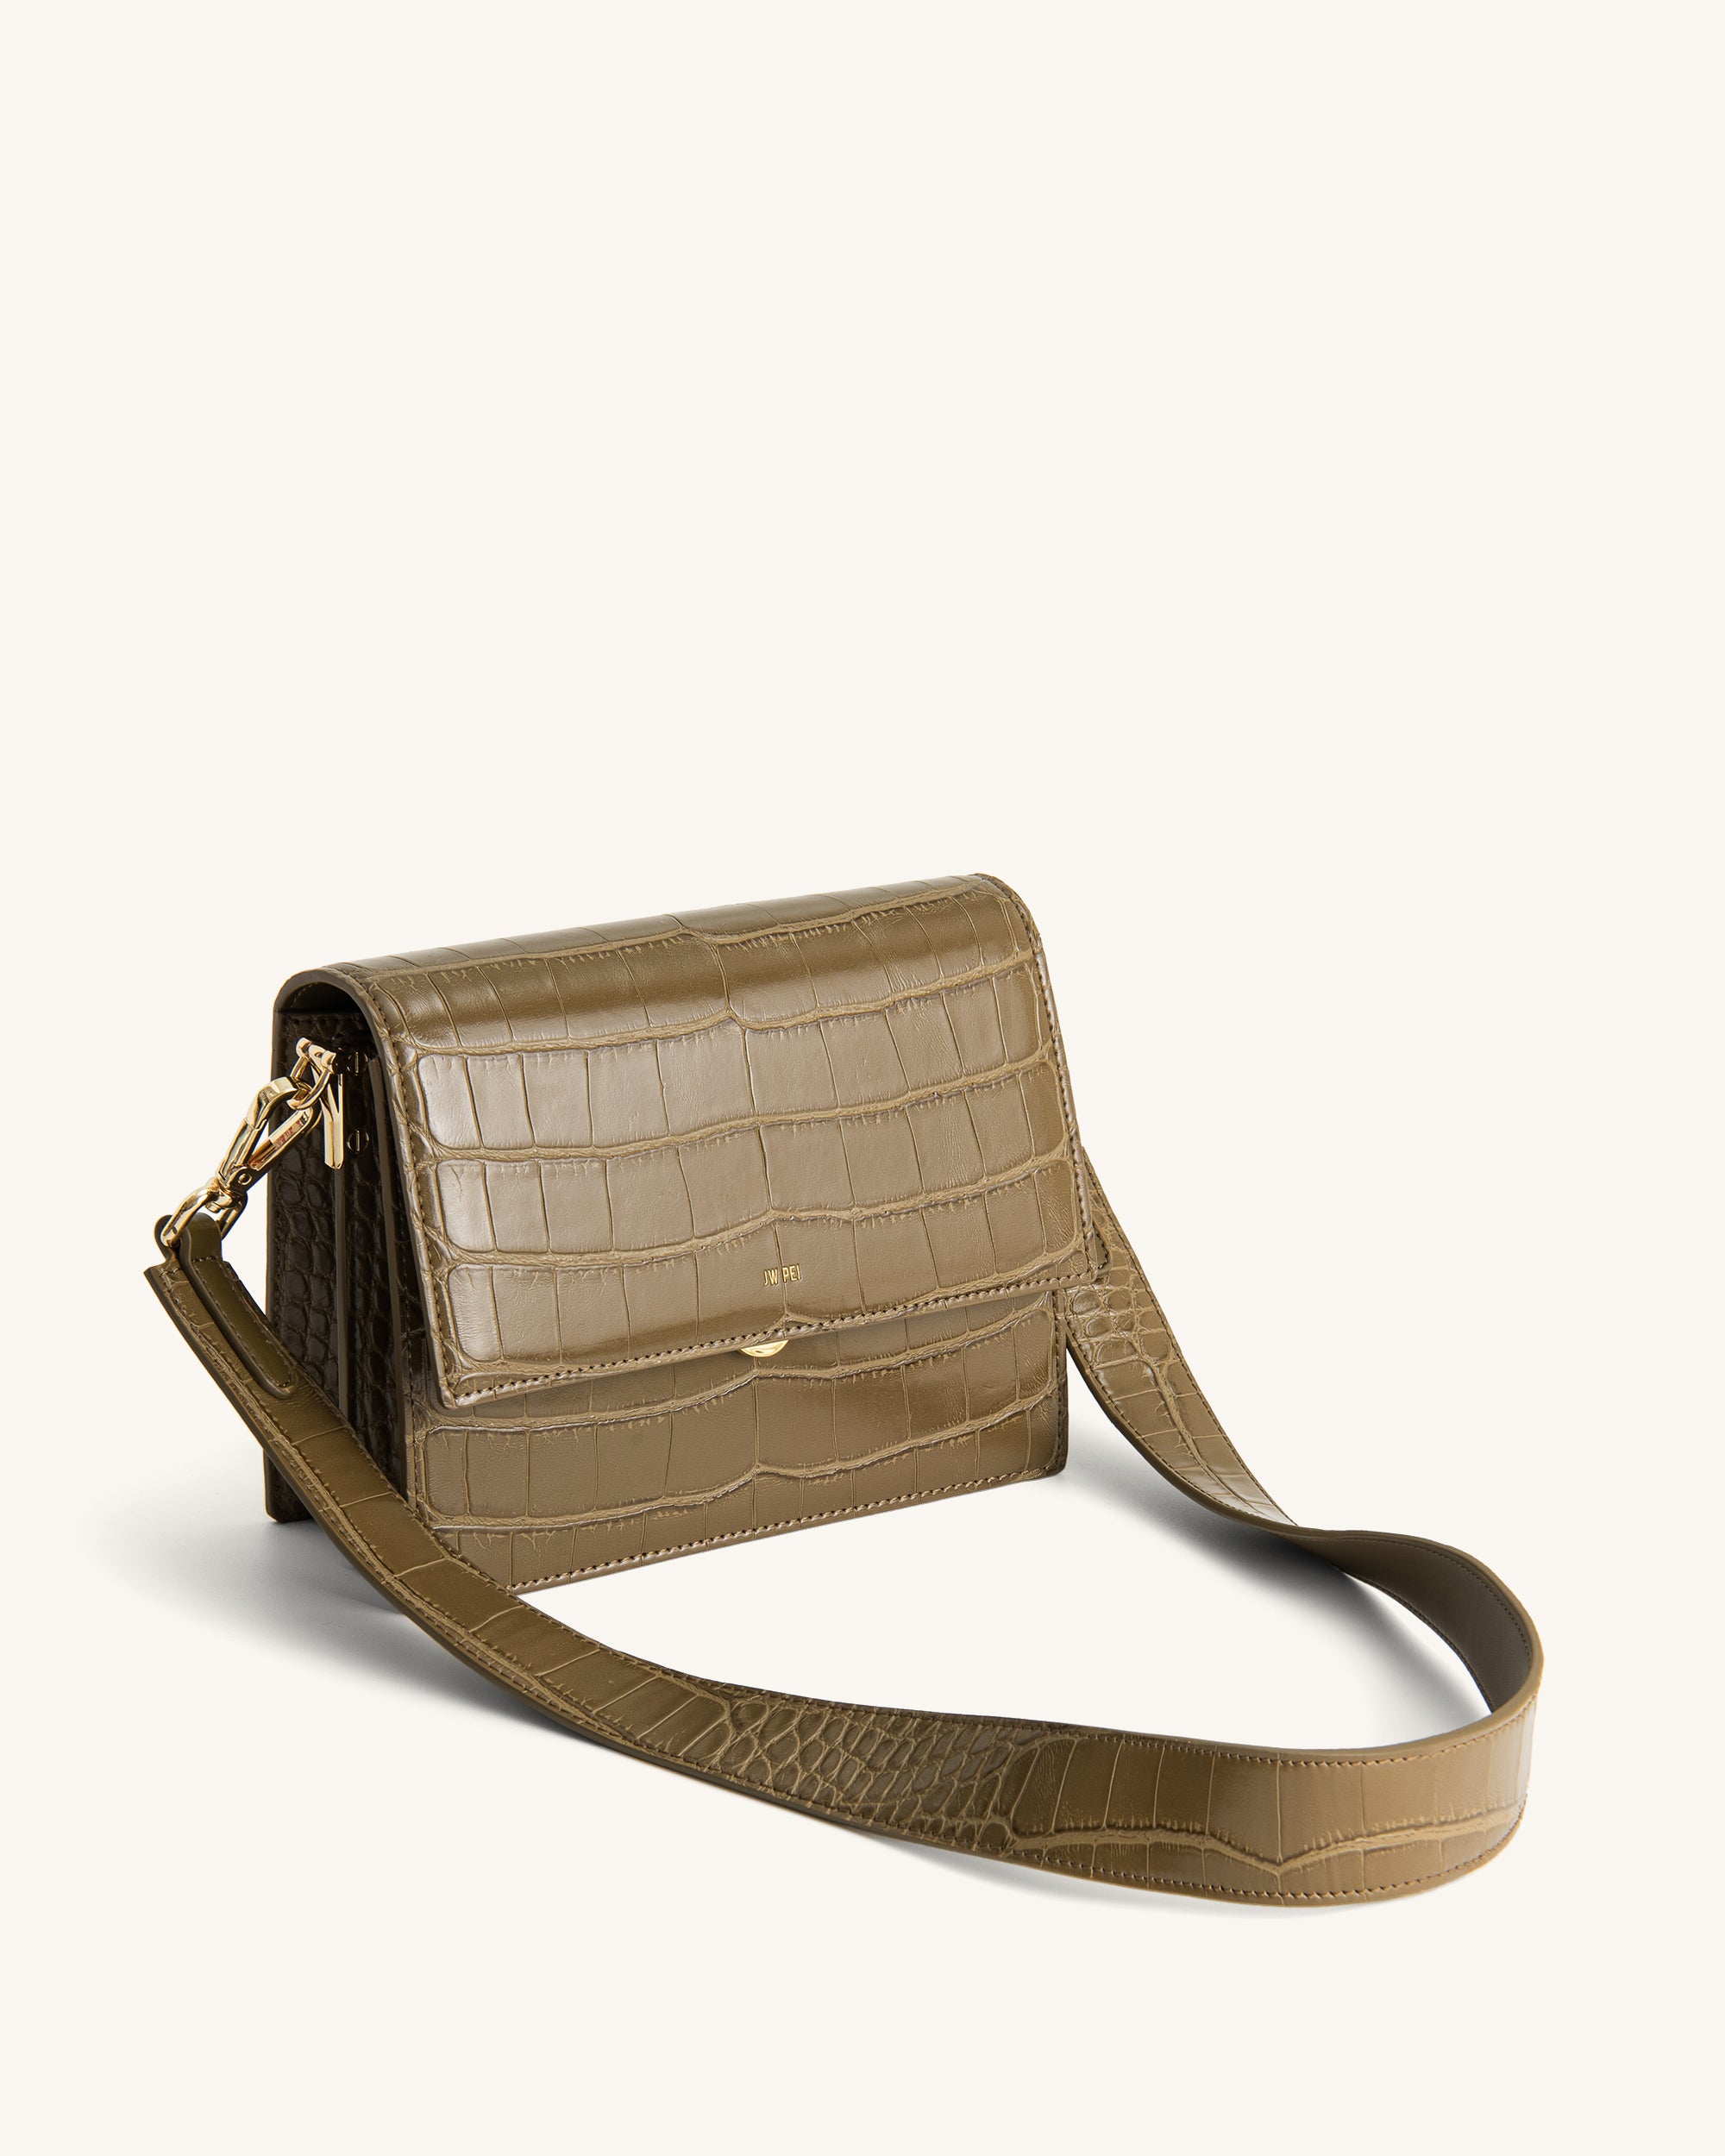 JW Pei - Authenticated Handbag - Brown Crocodile for Women, Very Good Condition